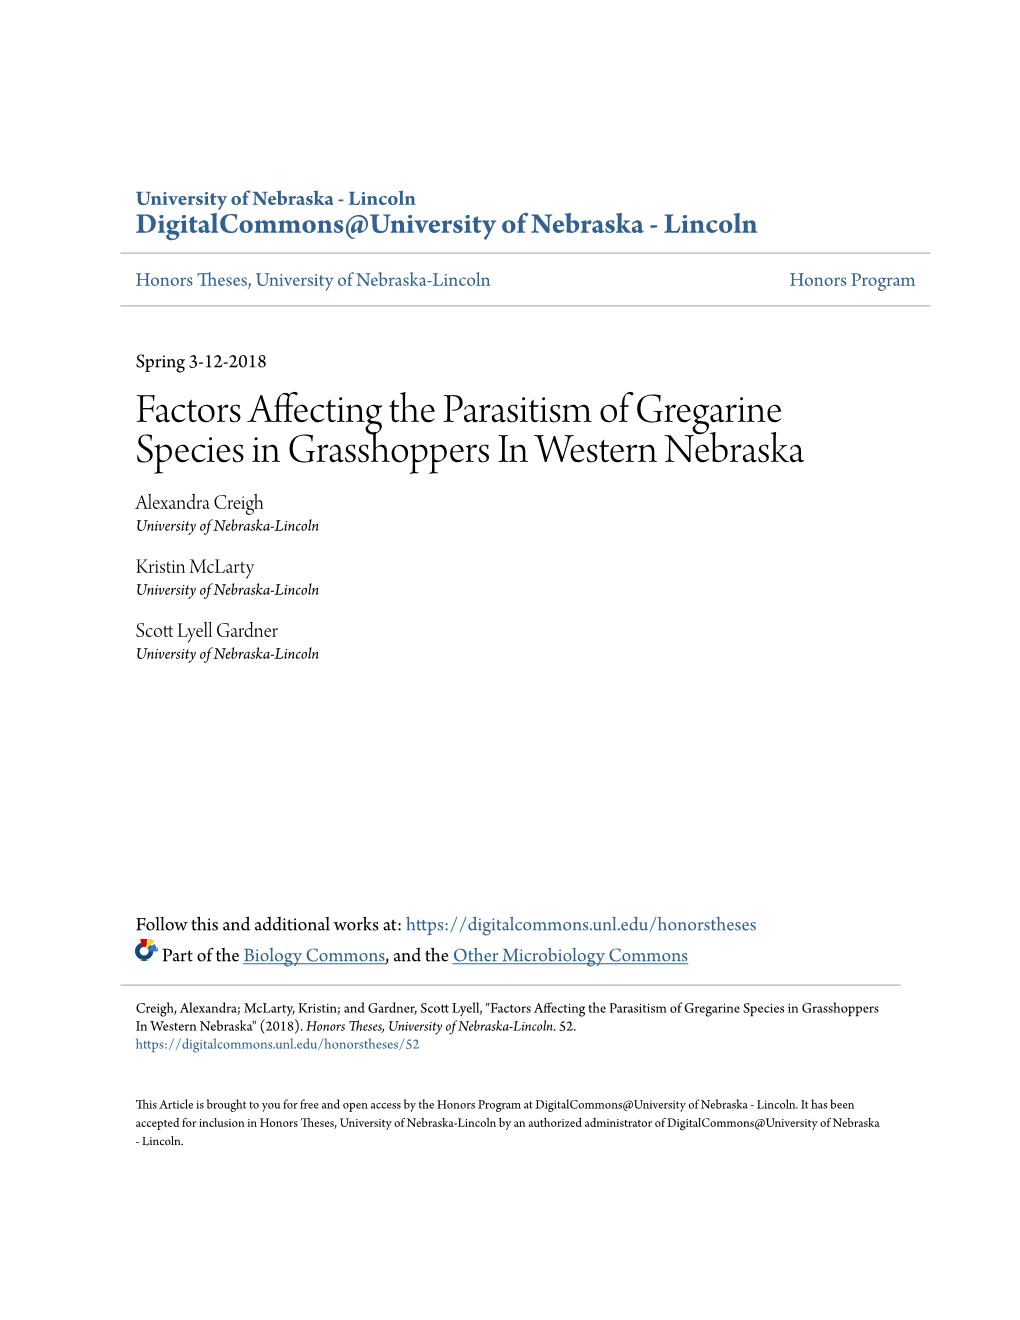 Factors Affecting the Parasitism of Gregarine Species in Grasshoppers in Western Nebraska Alexandra Creigh University of Nebraska-Lincoln